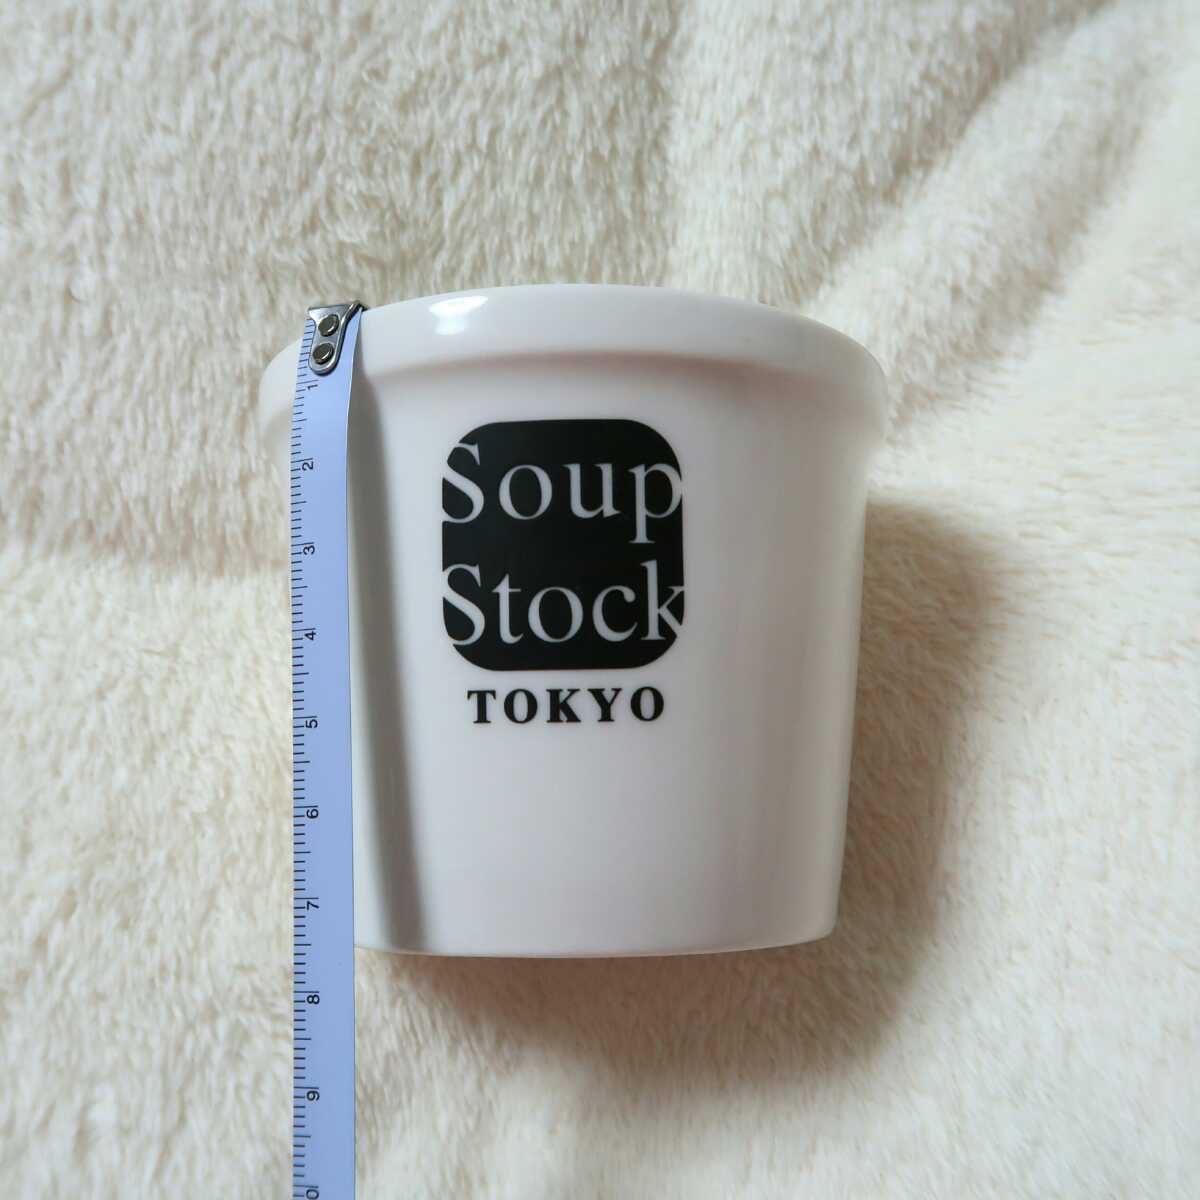 Soup Stock Tokyo スープカップ 食器 キッチン キッチン雑貨 インテリア オシャレ 東京 japan